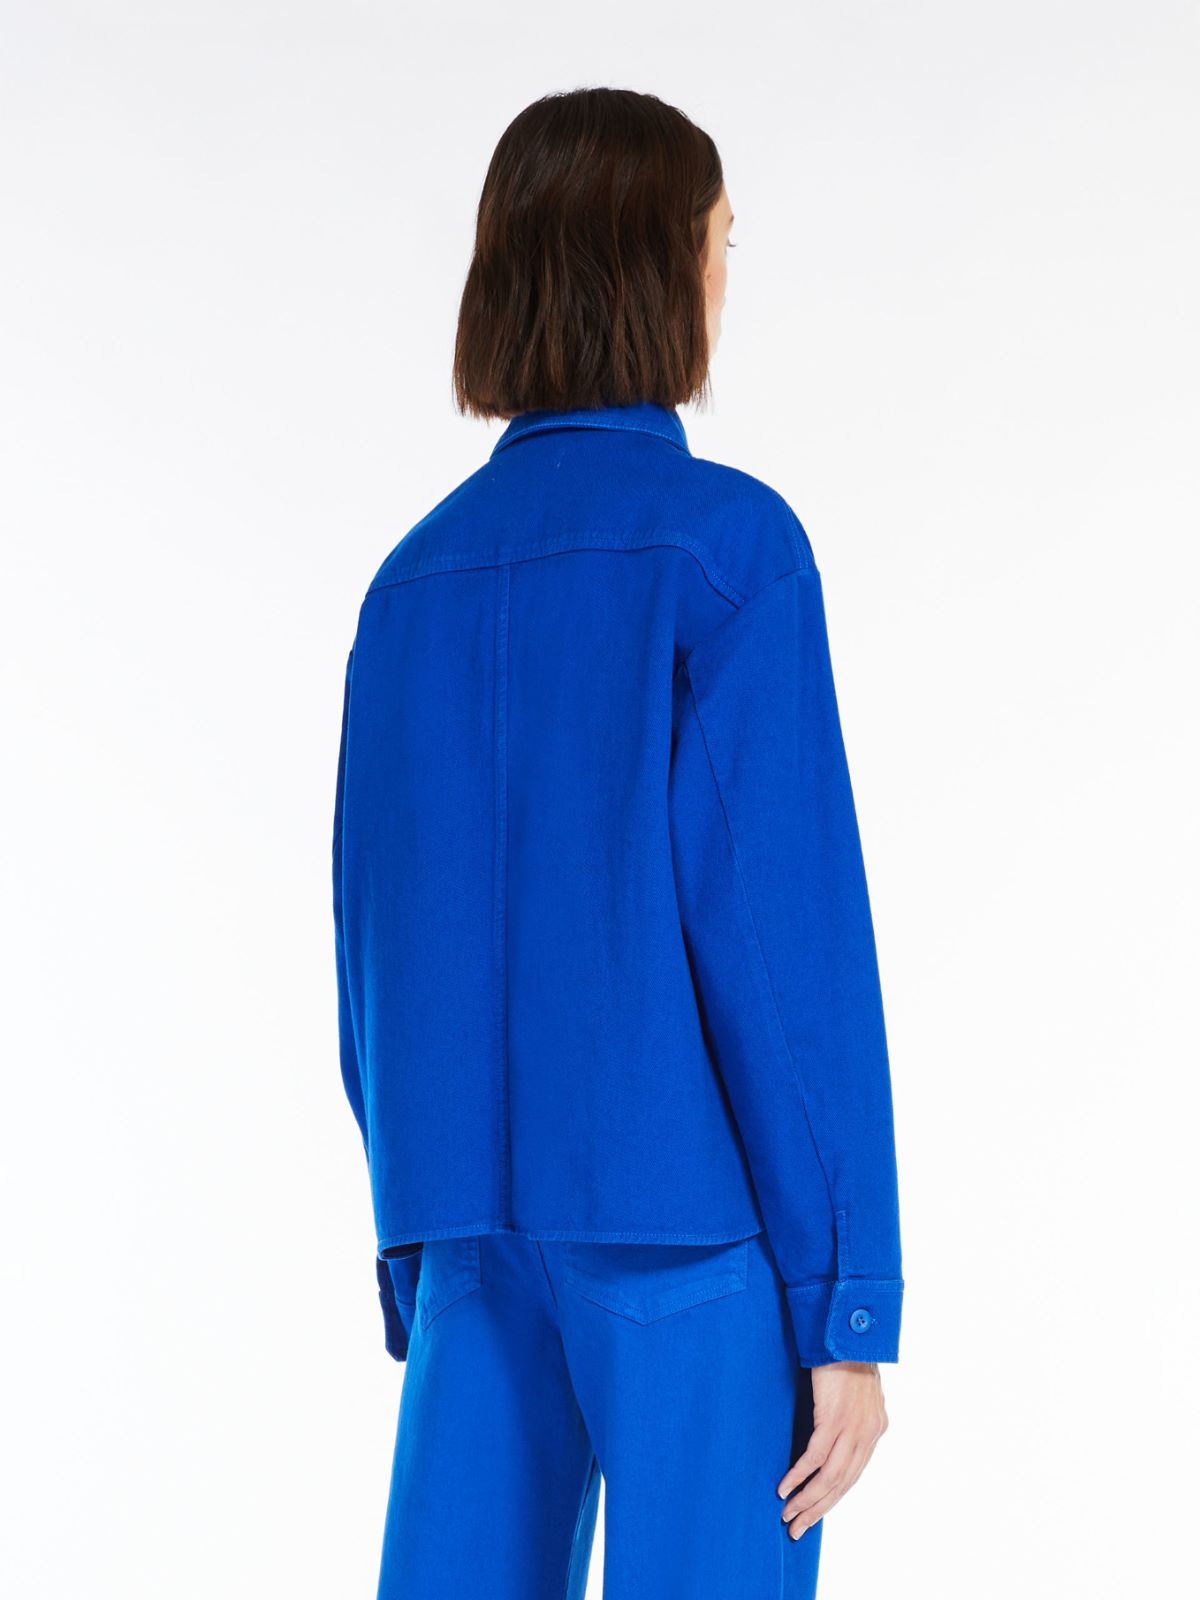 Jacket in organic cotton - CORNFLOWER BLUE - Weekend Max Mara - 3